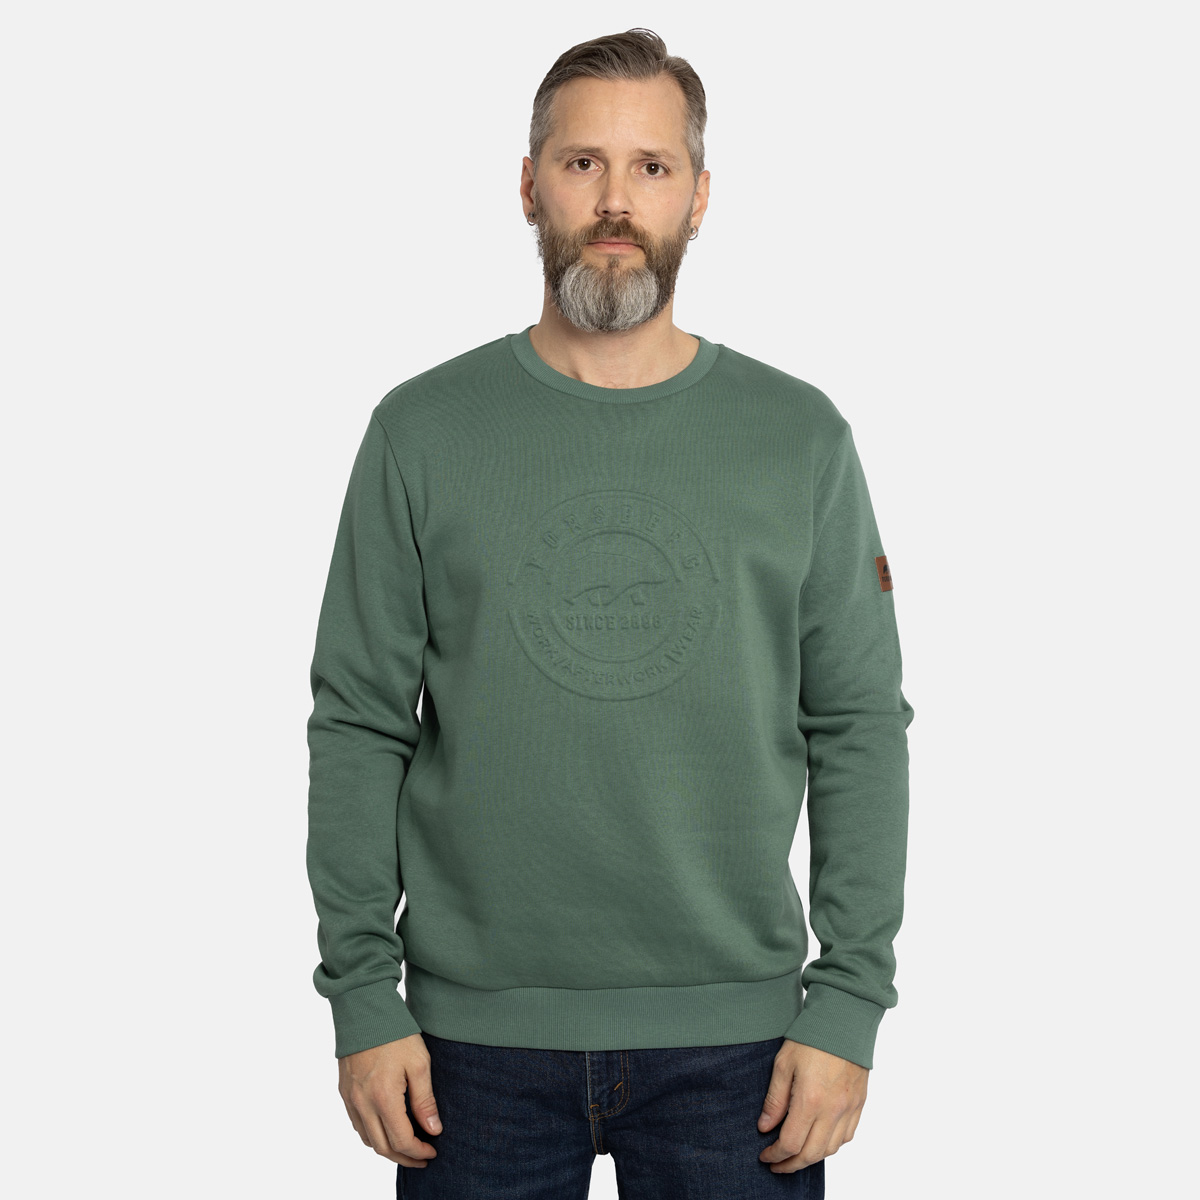 FORSBERG Sweatshirt mit 3D Logo - 3